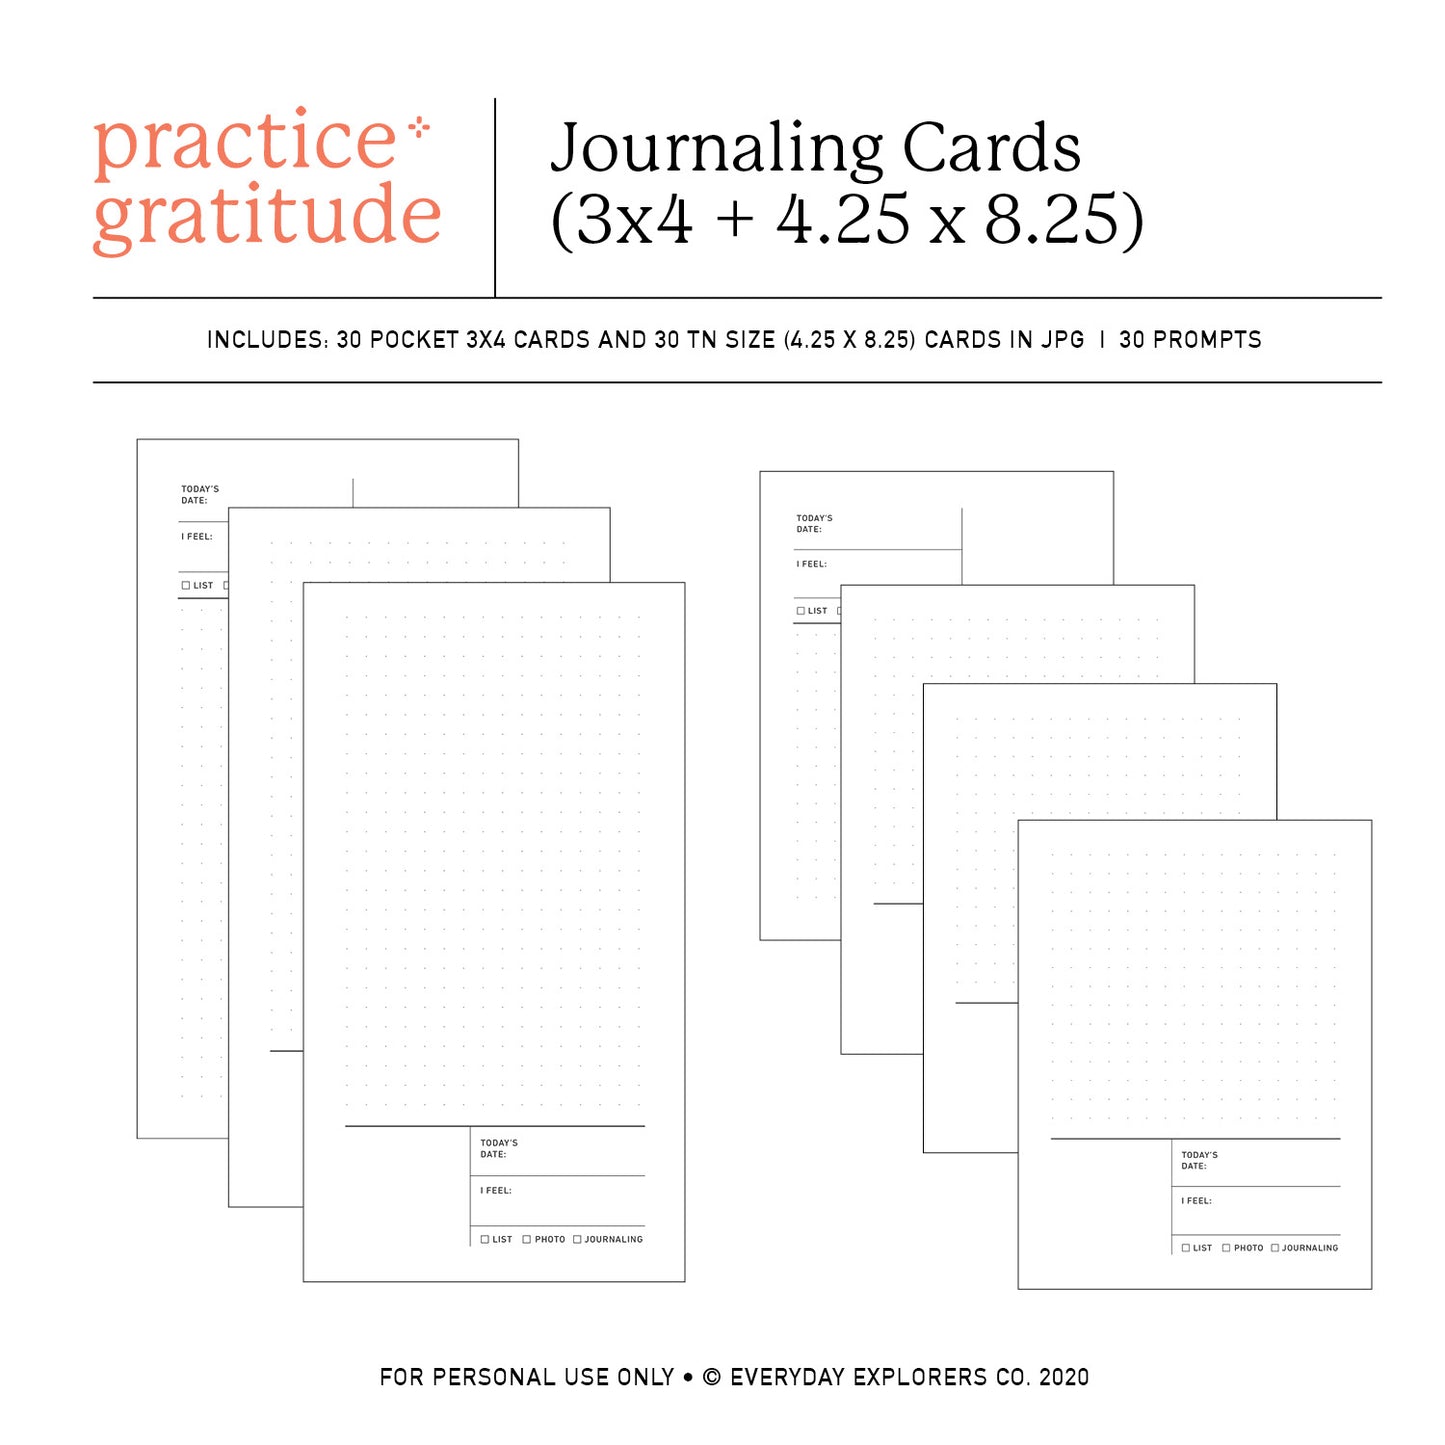 Practice Gratitude - Extra Cards